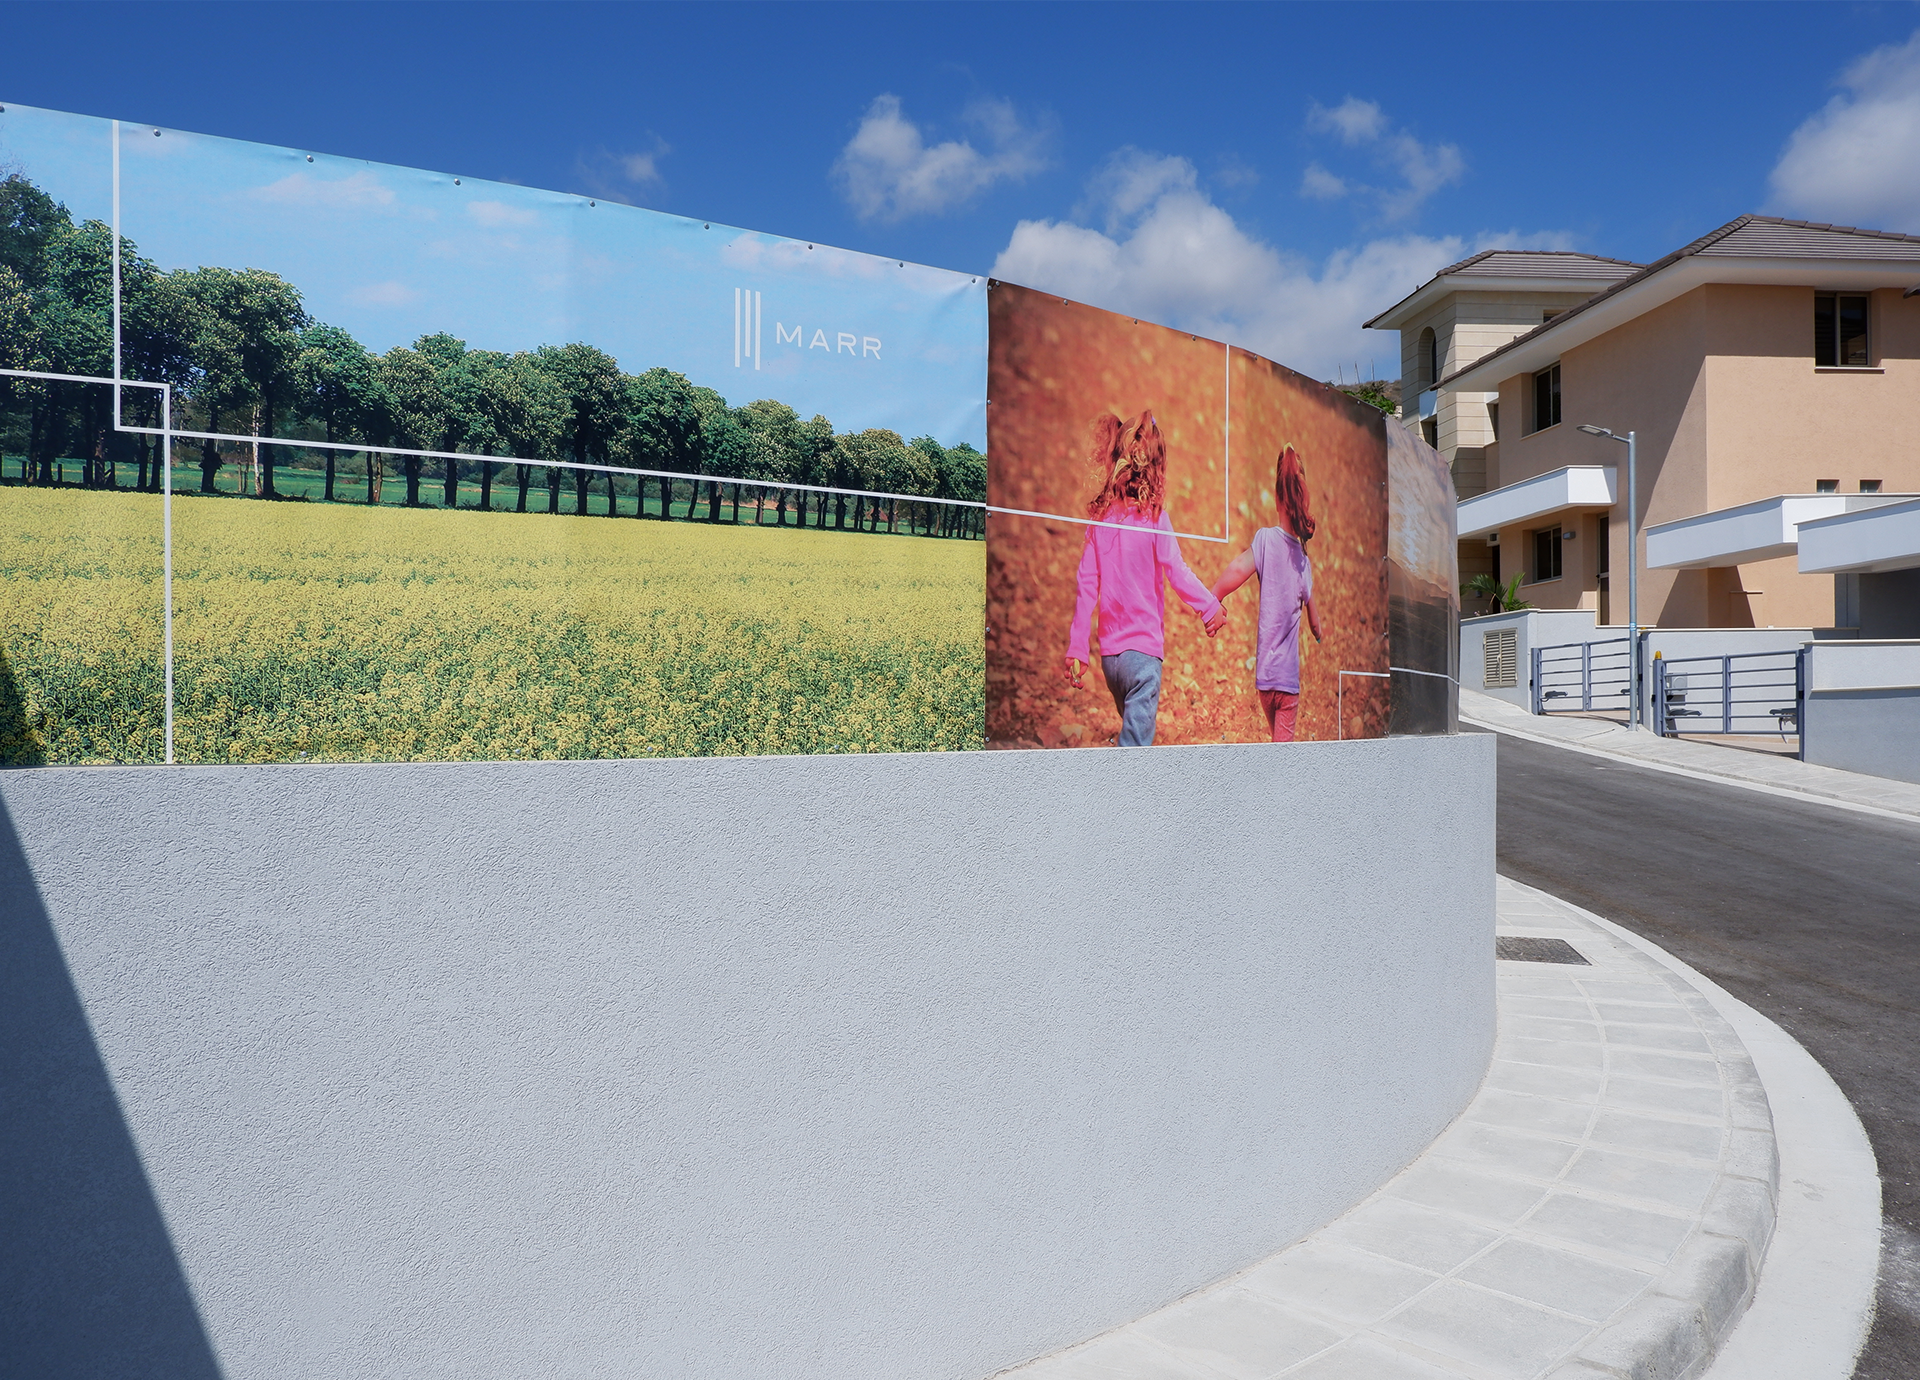 Branding Box: Hoarding design for Marr Villas project